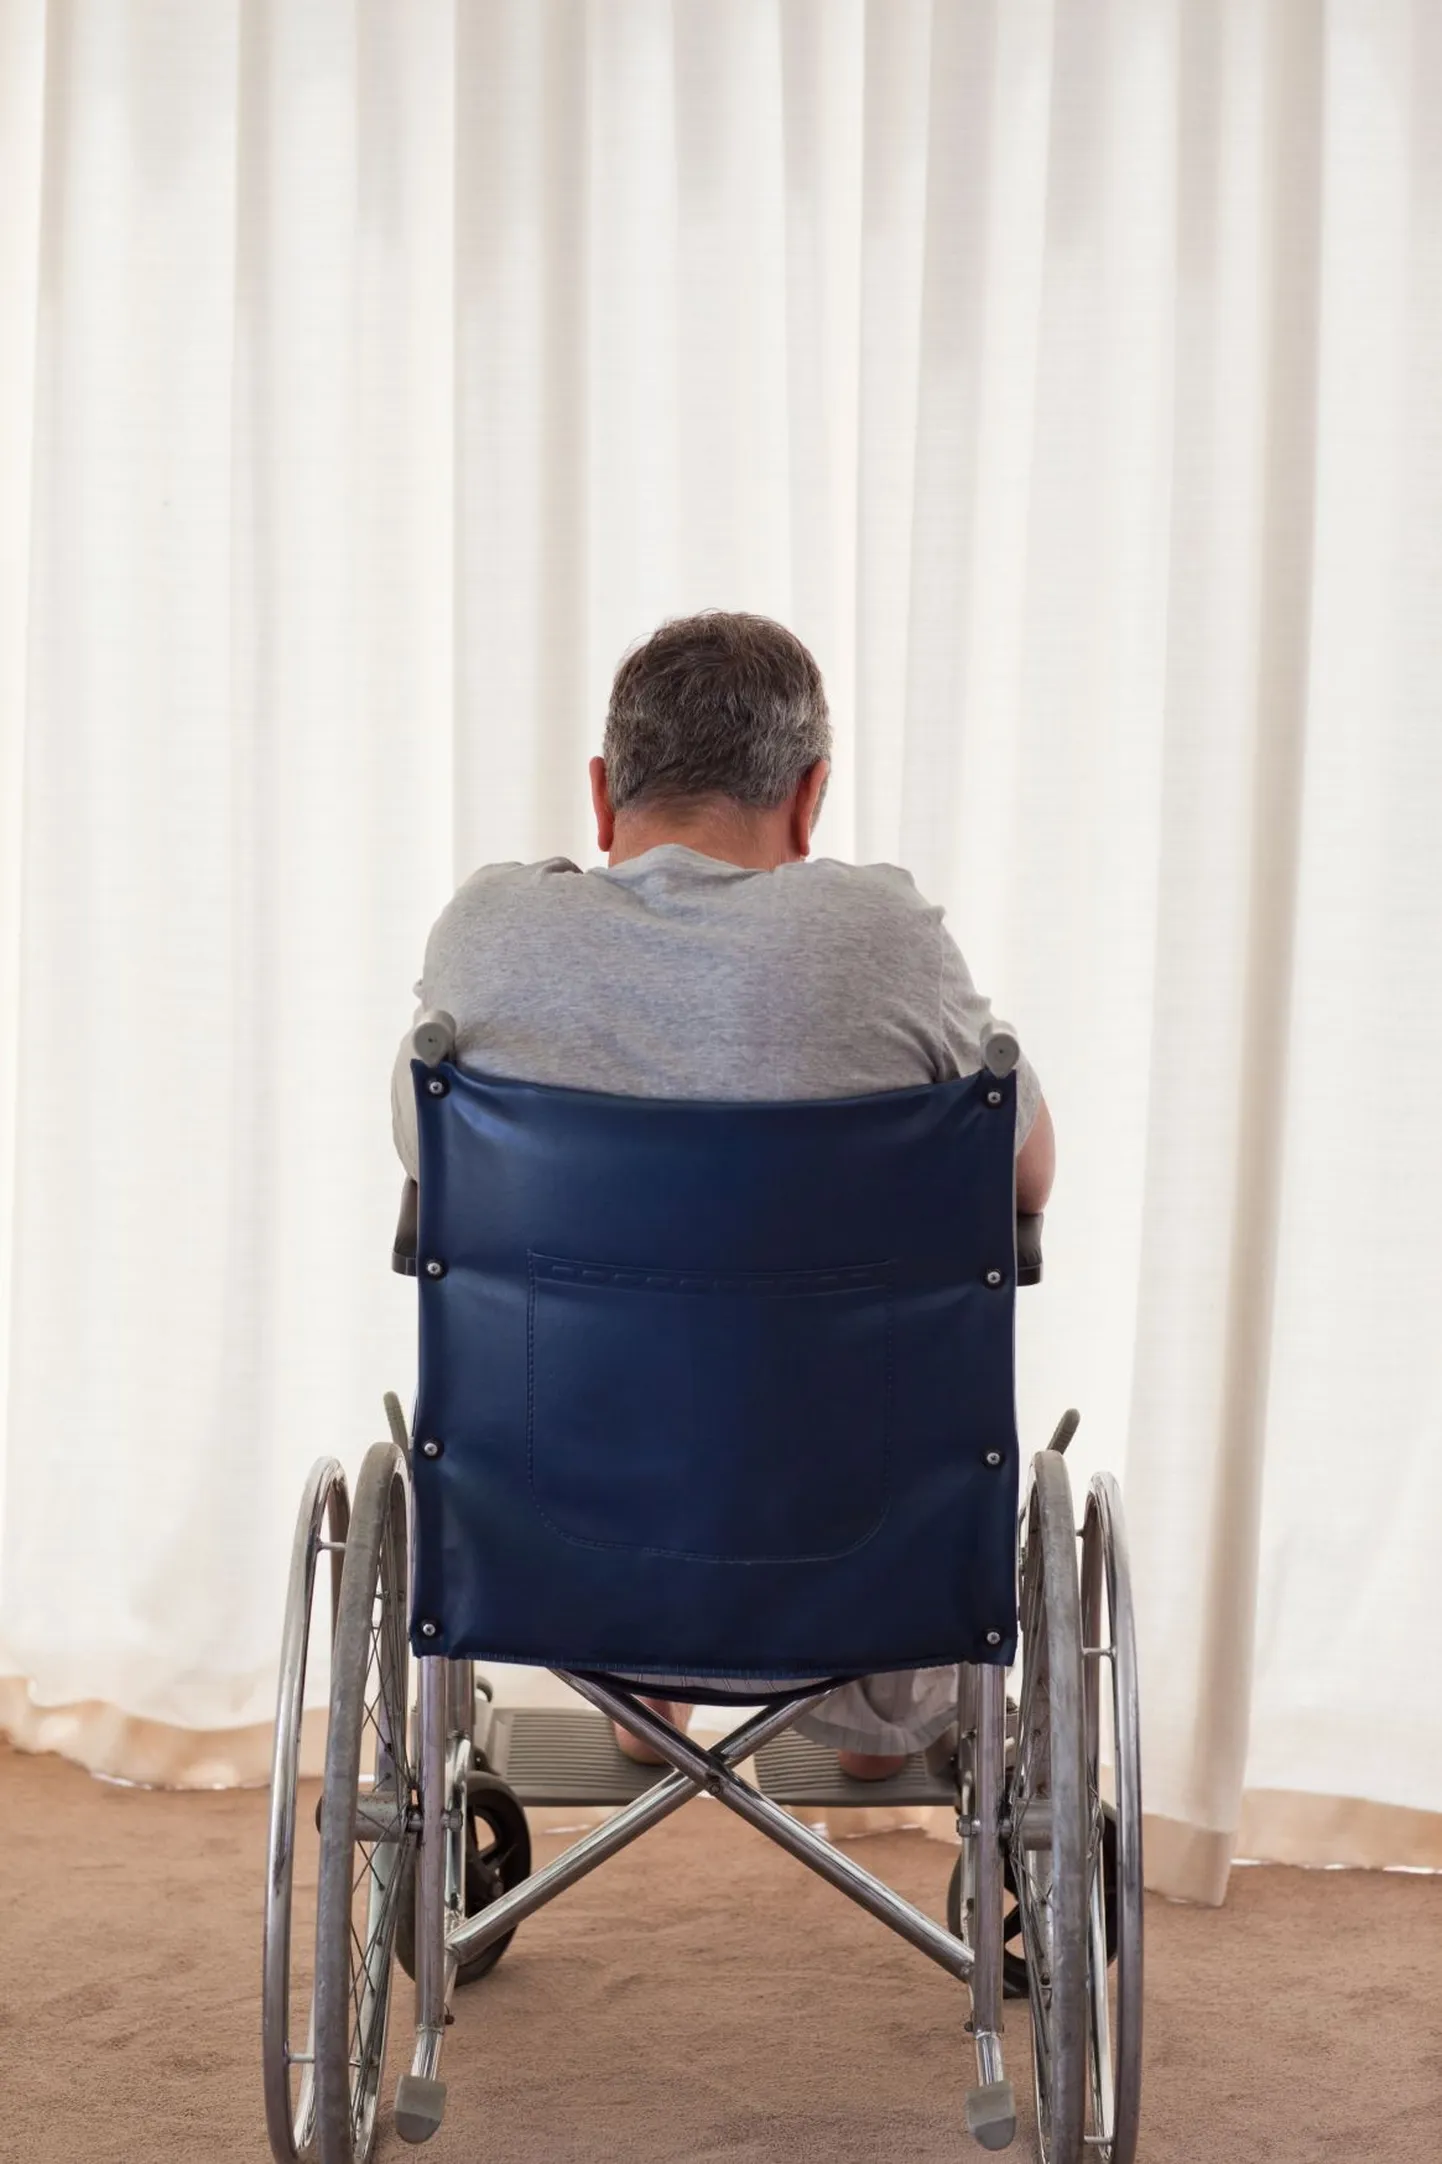 Мужчина на инвалидной коляске. Иллюстративное фото.